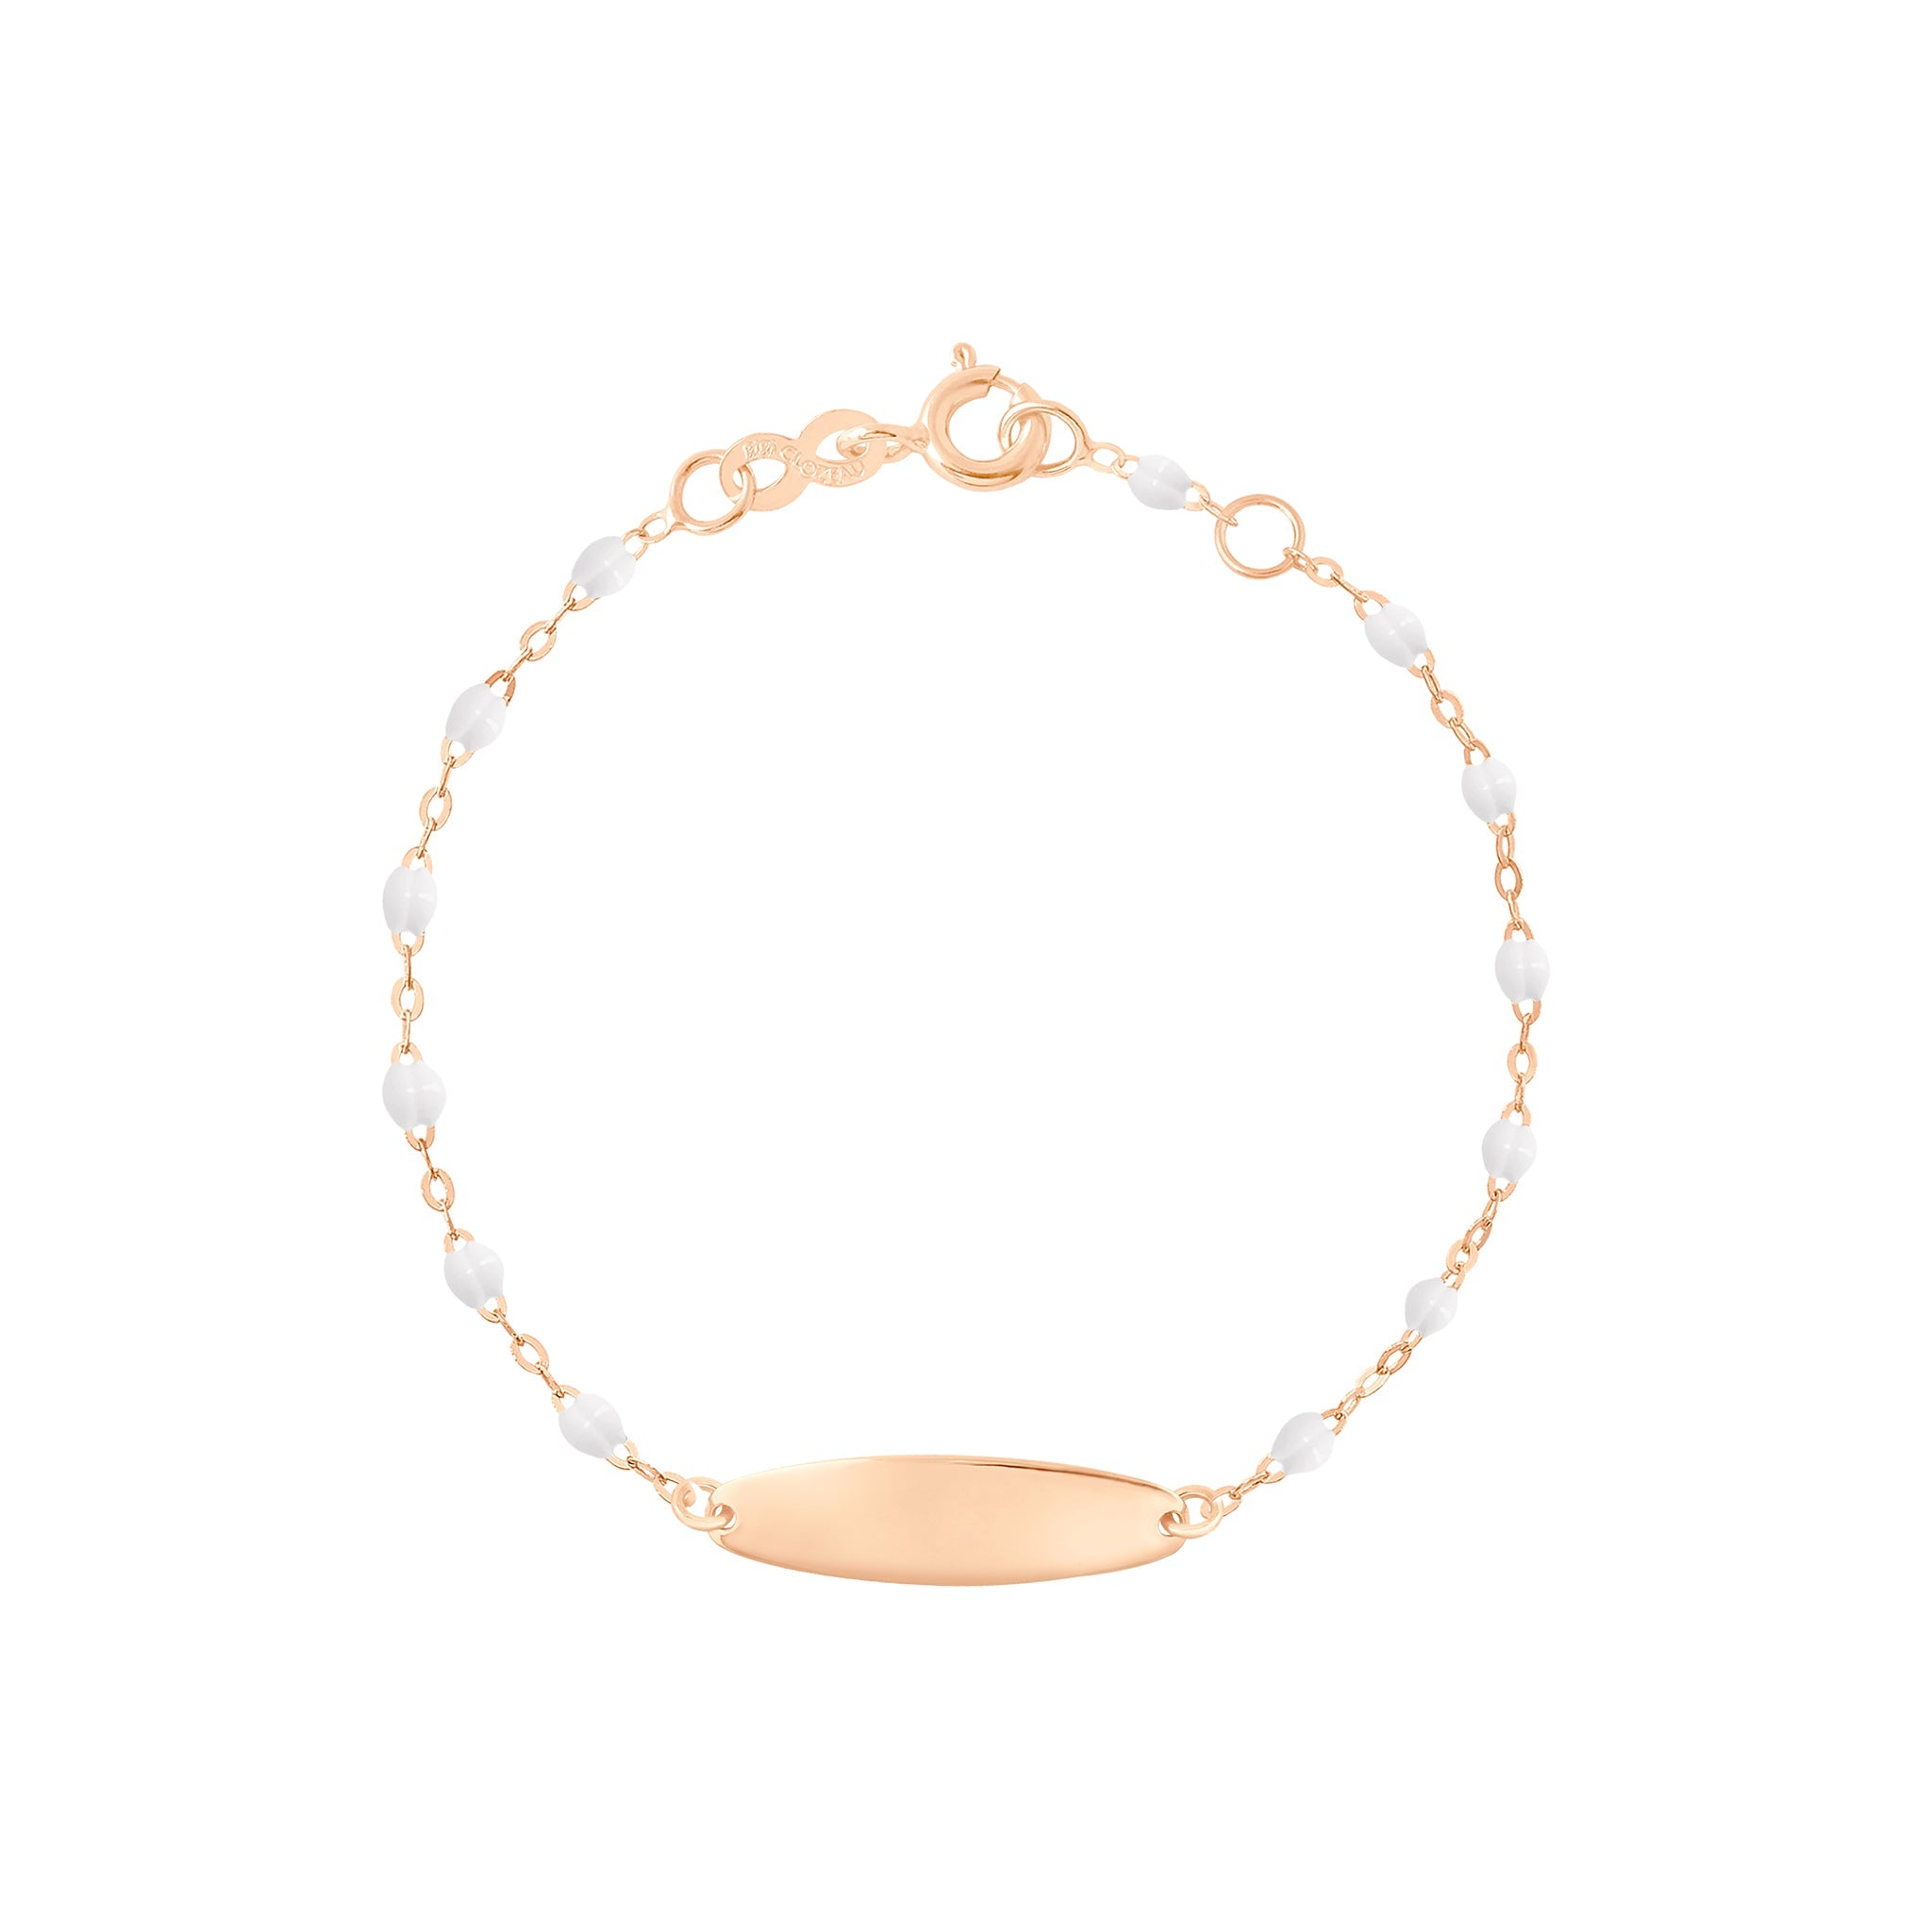 Bracelet blanc Little Gigi, plaque ovale, or rose, 13 cm little gigi Référence :  b3lg002r0113xx -1